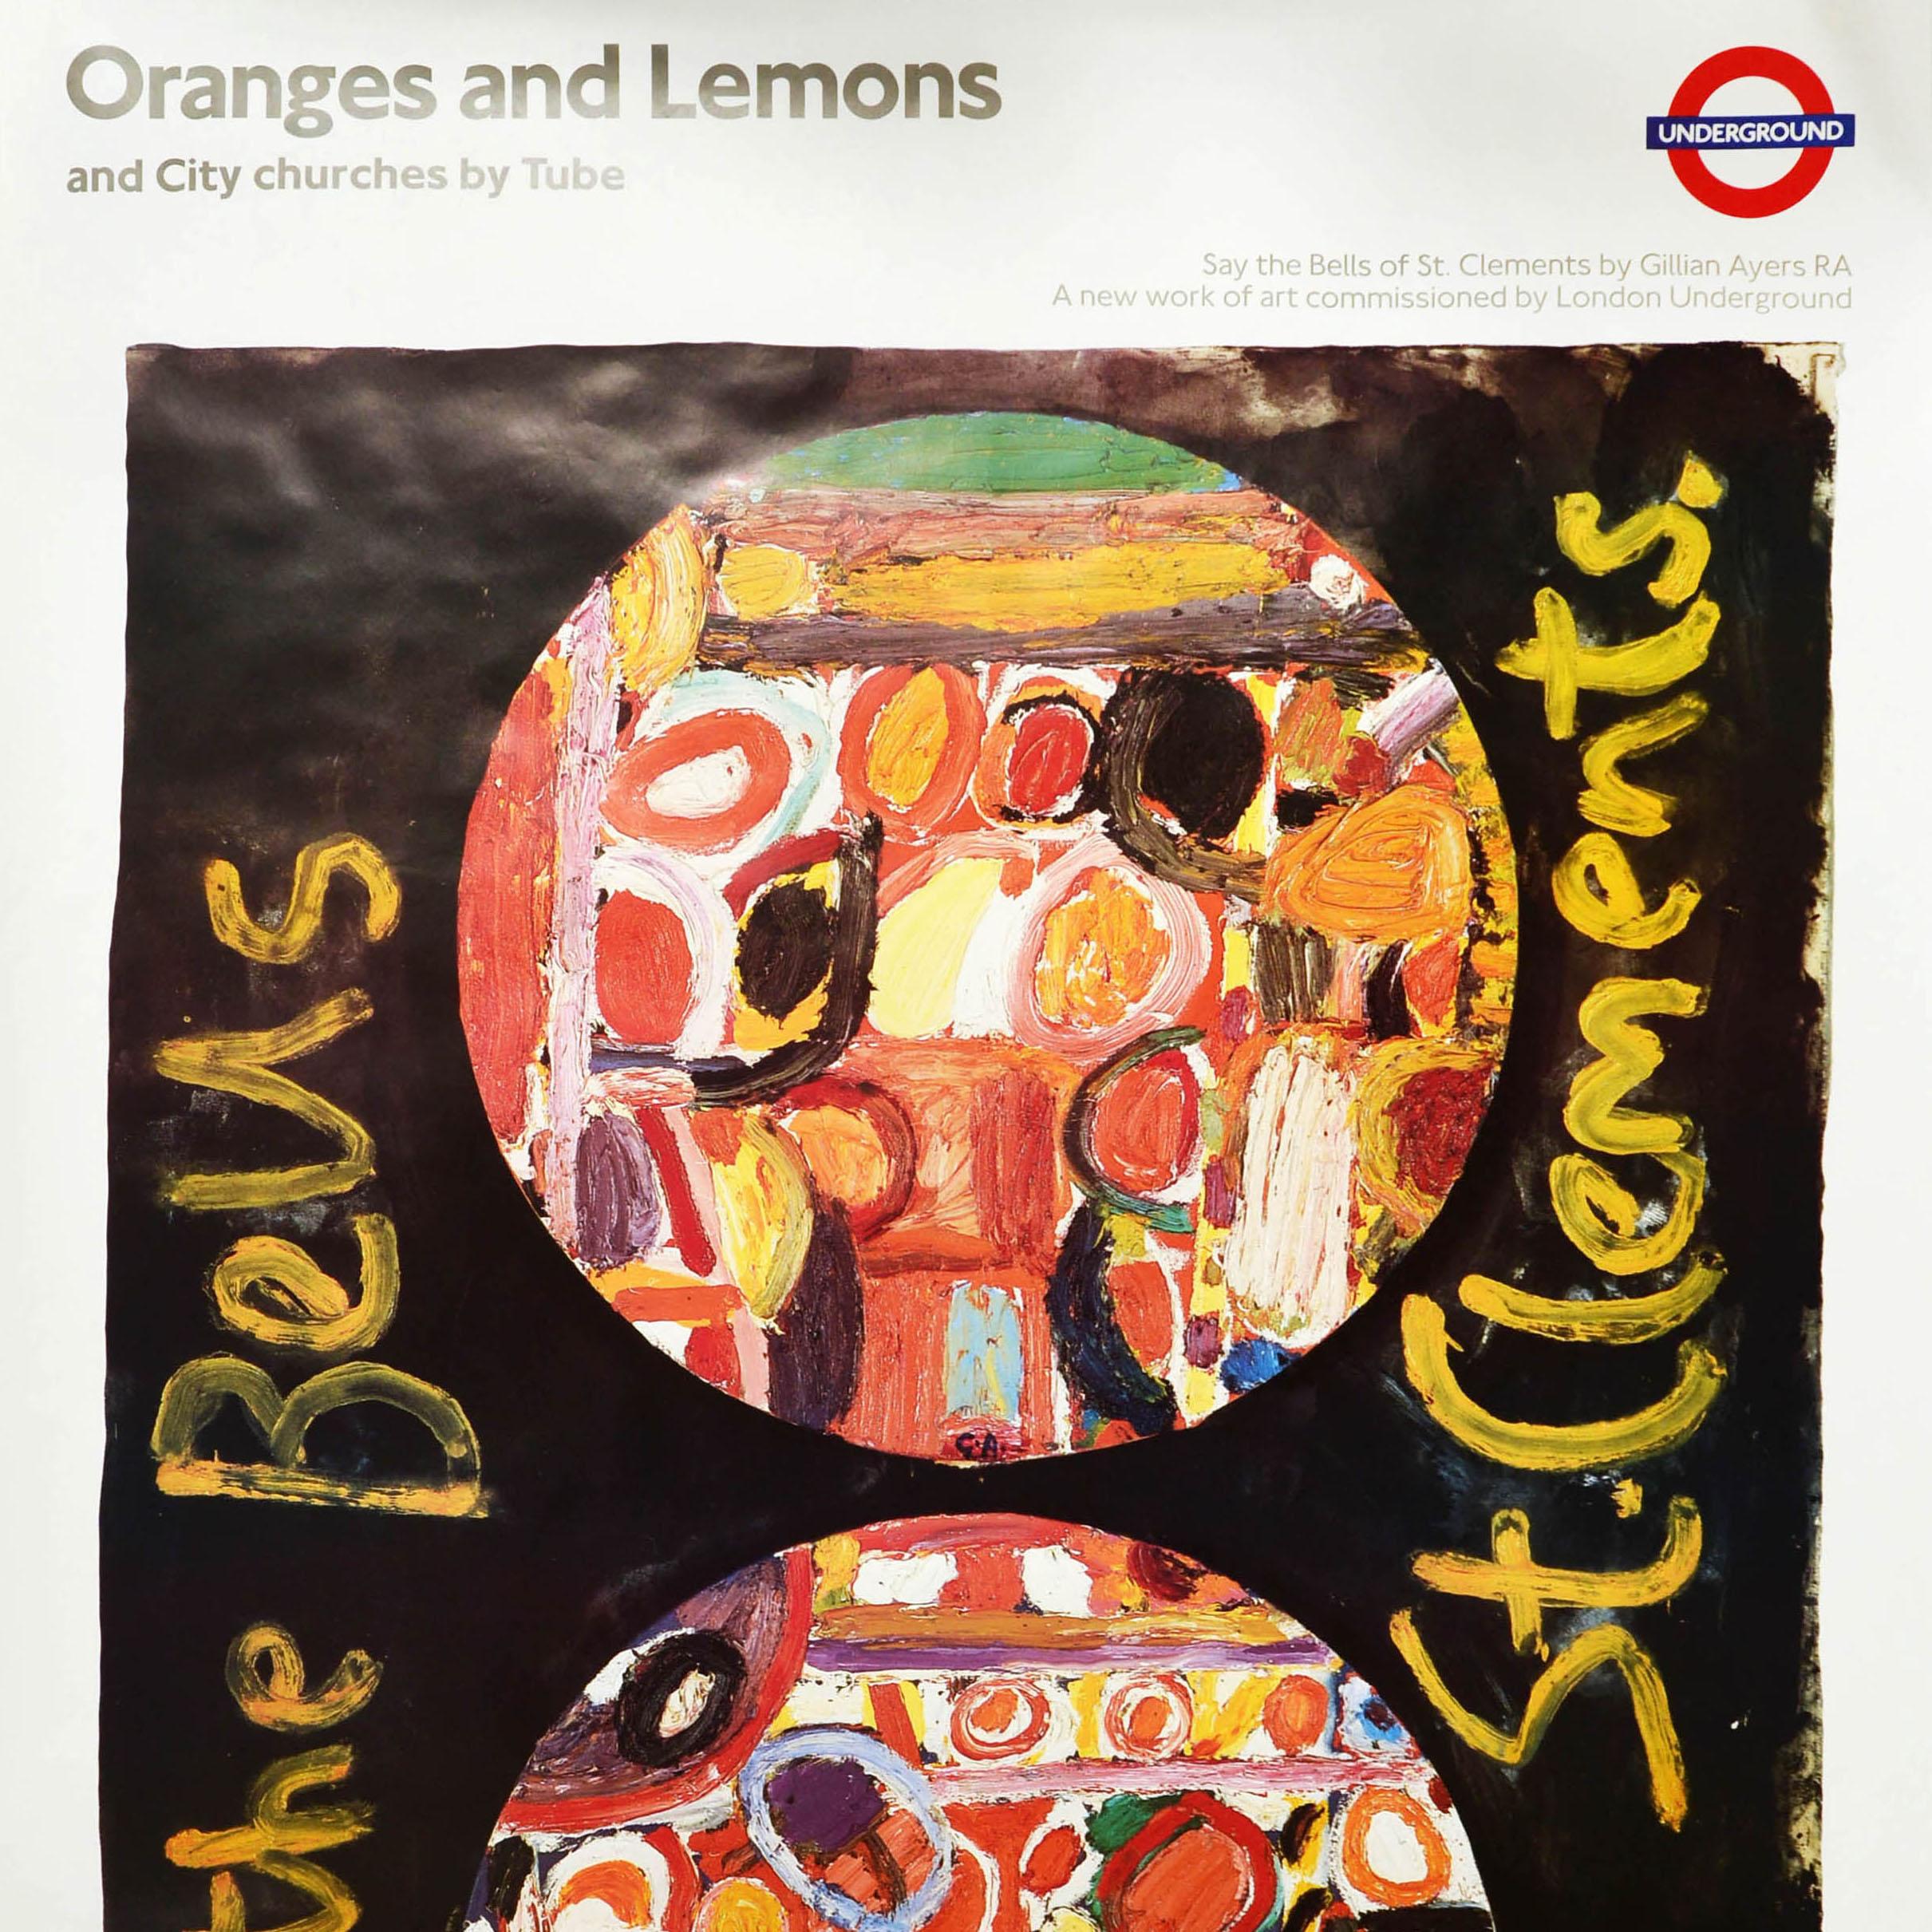 British Original Vintage London Transport Poster Oranges And Lemons City Churches Design For Sale